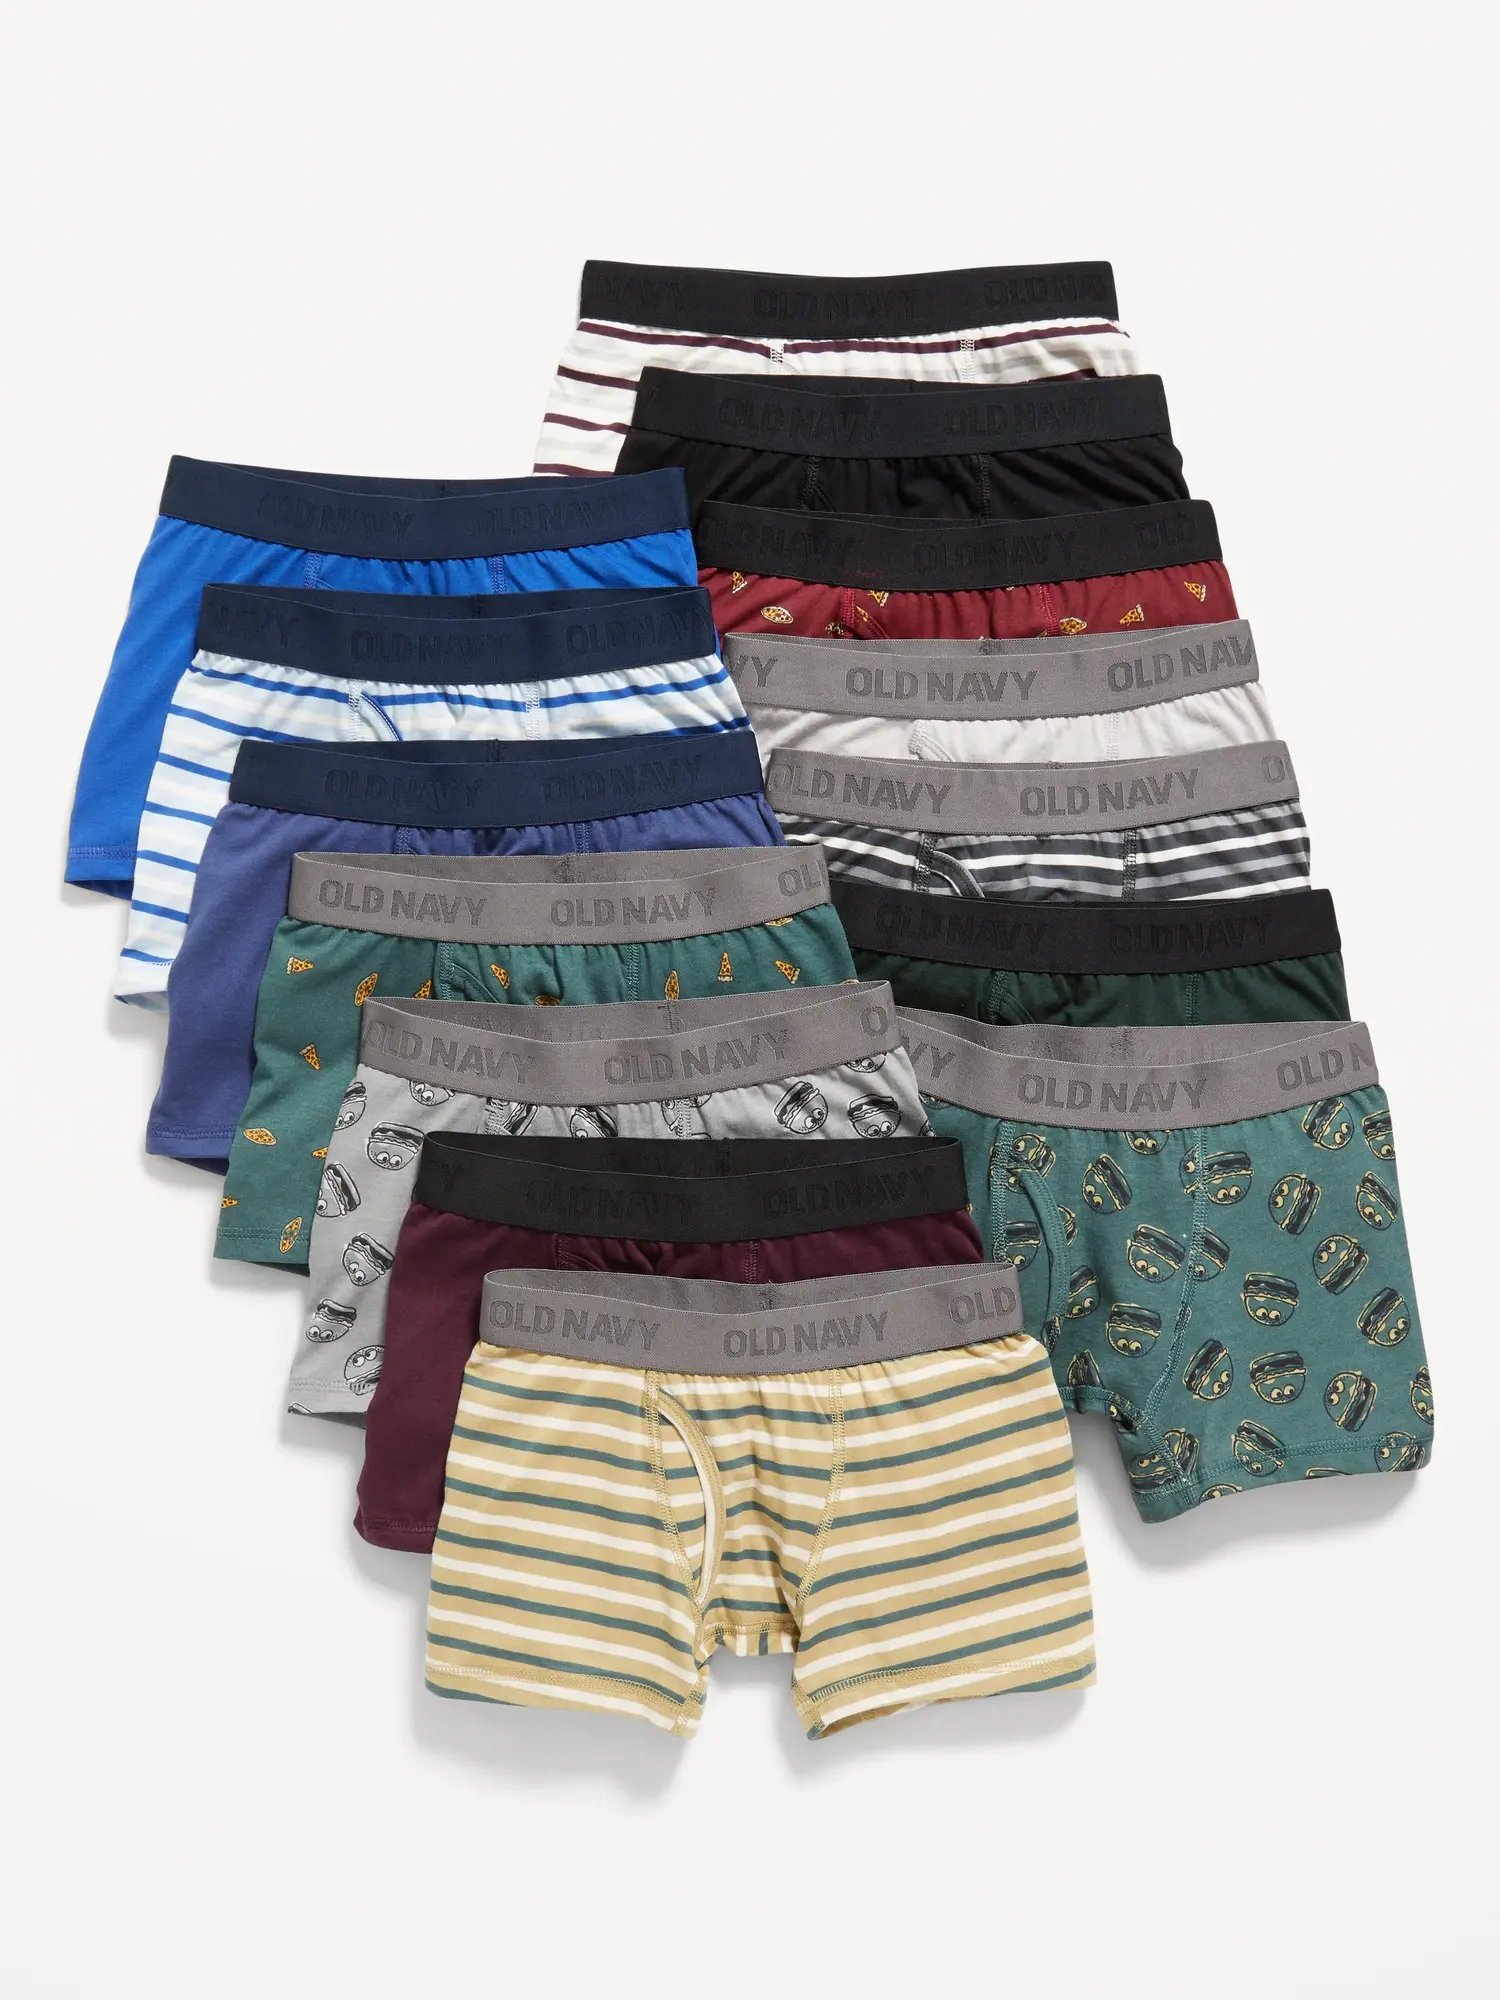 Old Navy Boxer-Briefs Underwear Variety 14-Pack for Boys multi. 1